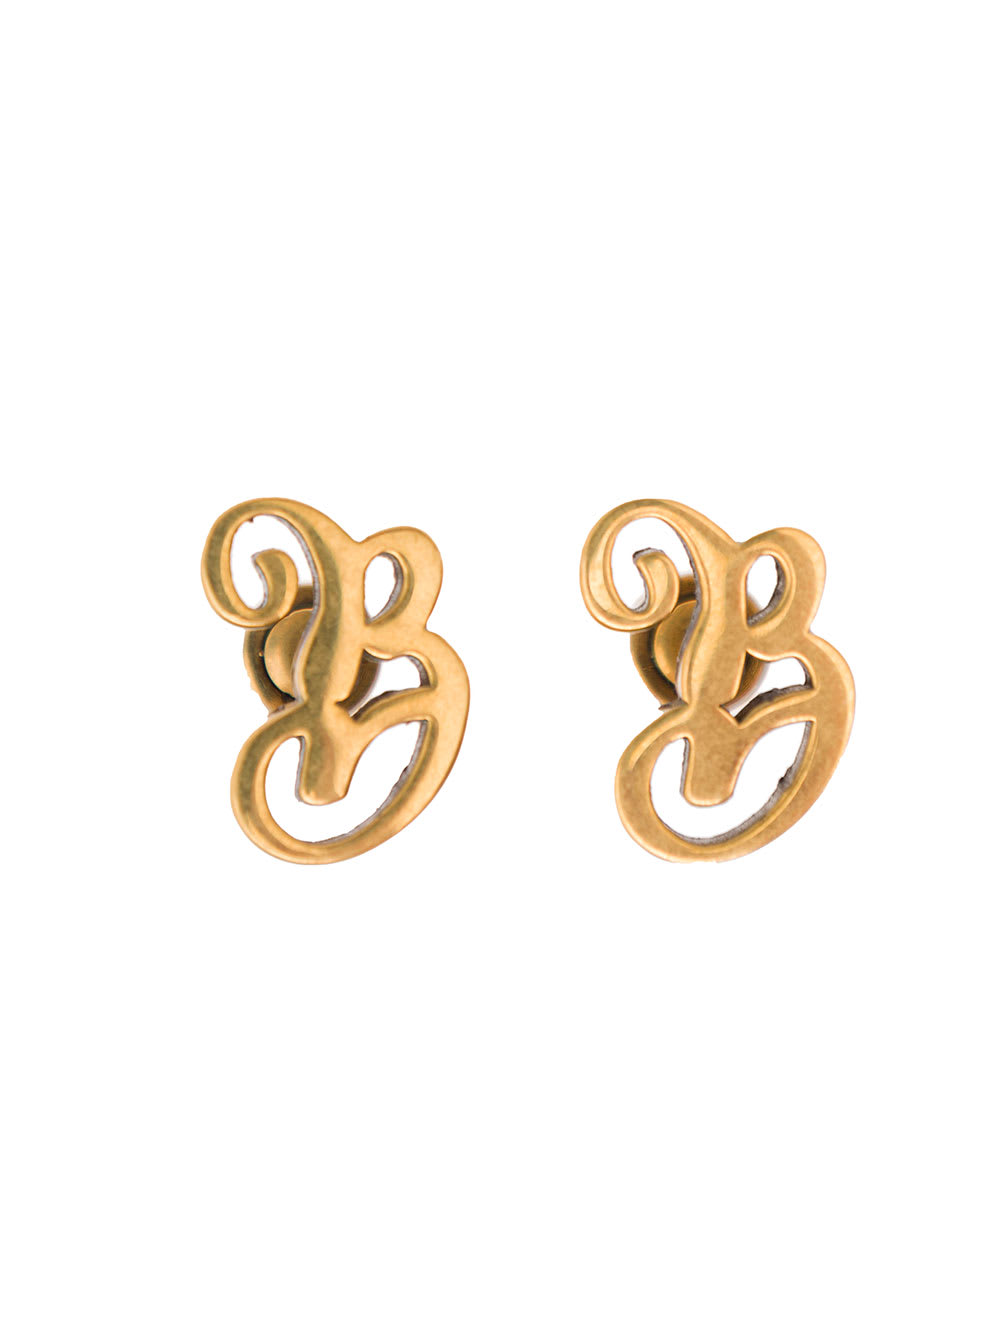 Typo B Antique Brass Earrings Balenciaga Woman